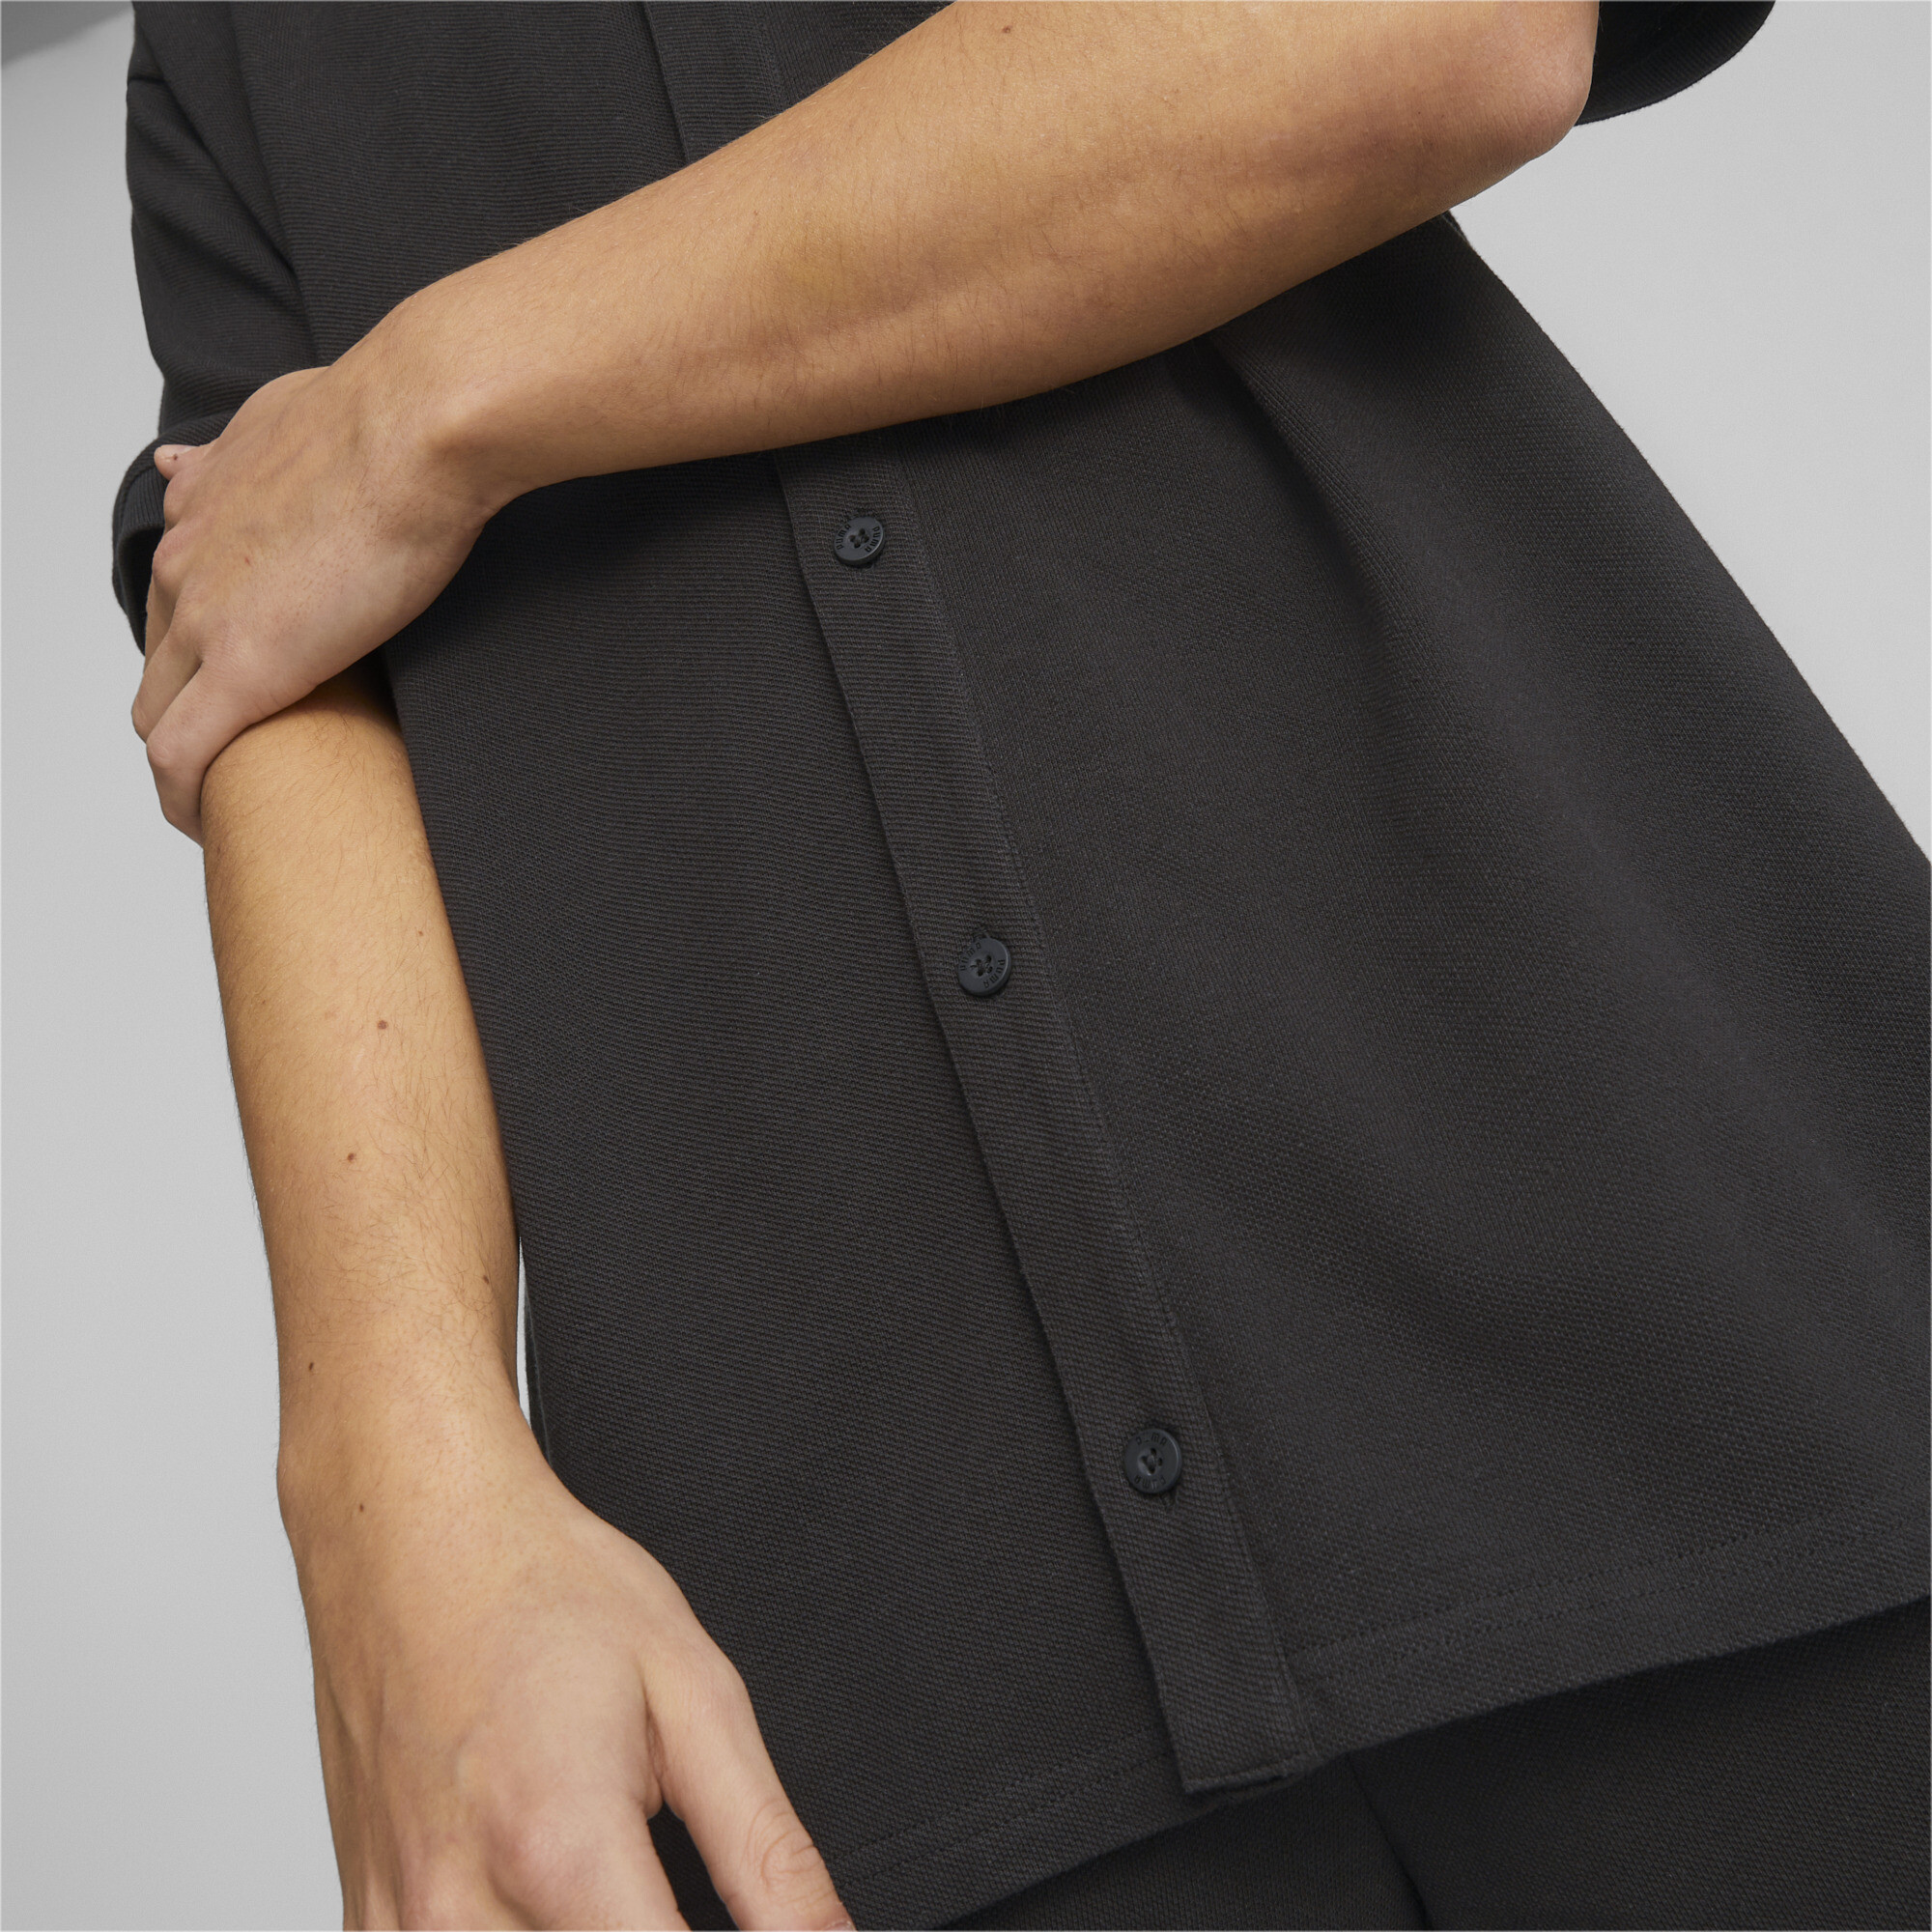 Men's PUMA Classics Pique Shirt Men In Black, Size Medium